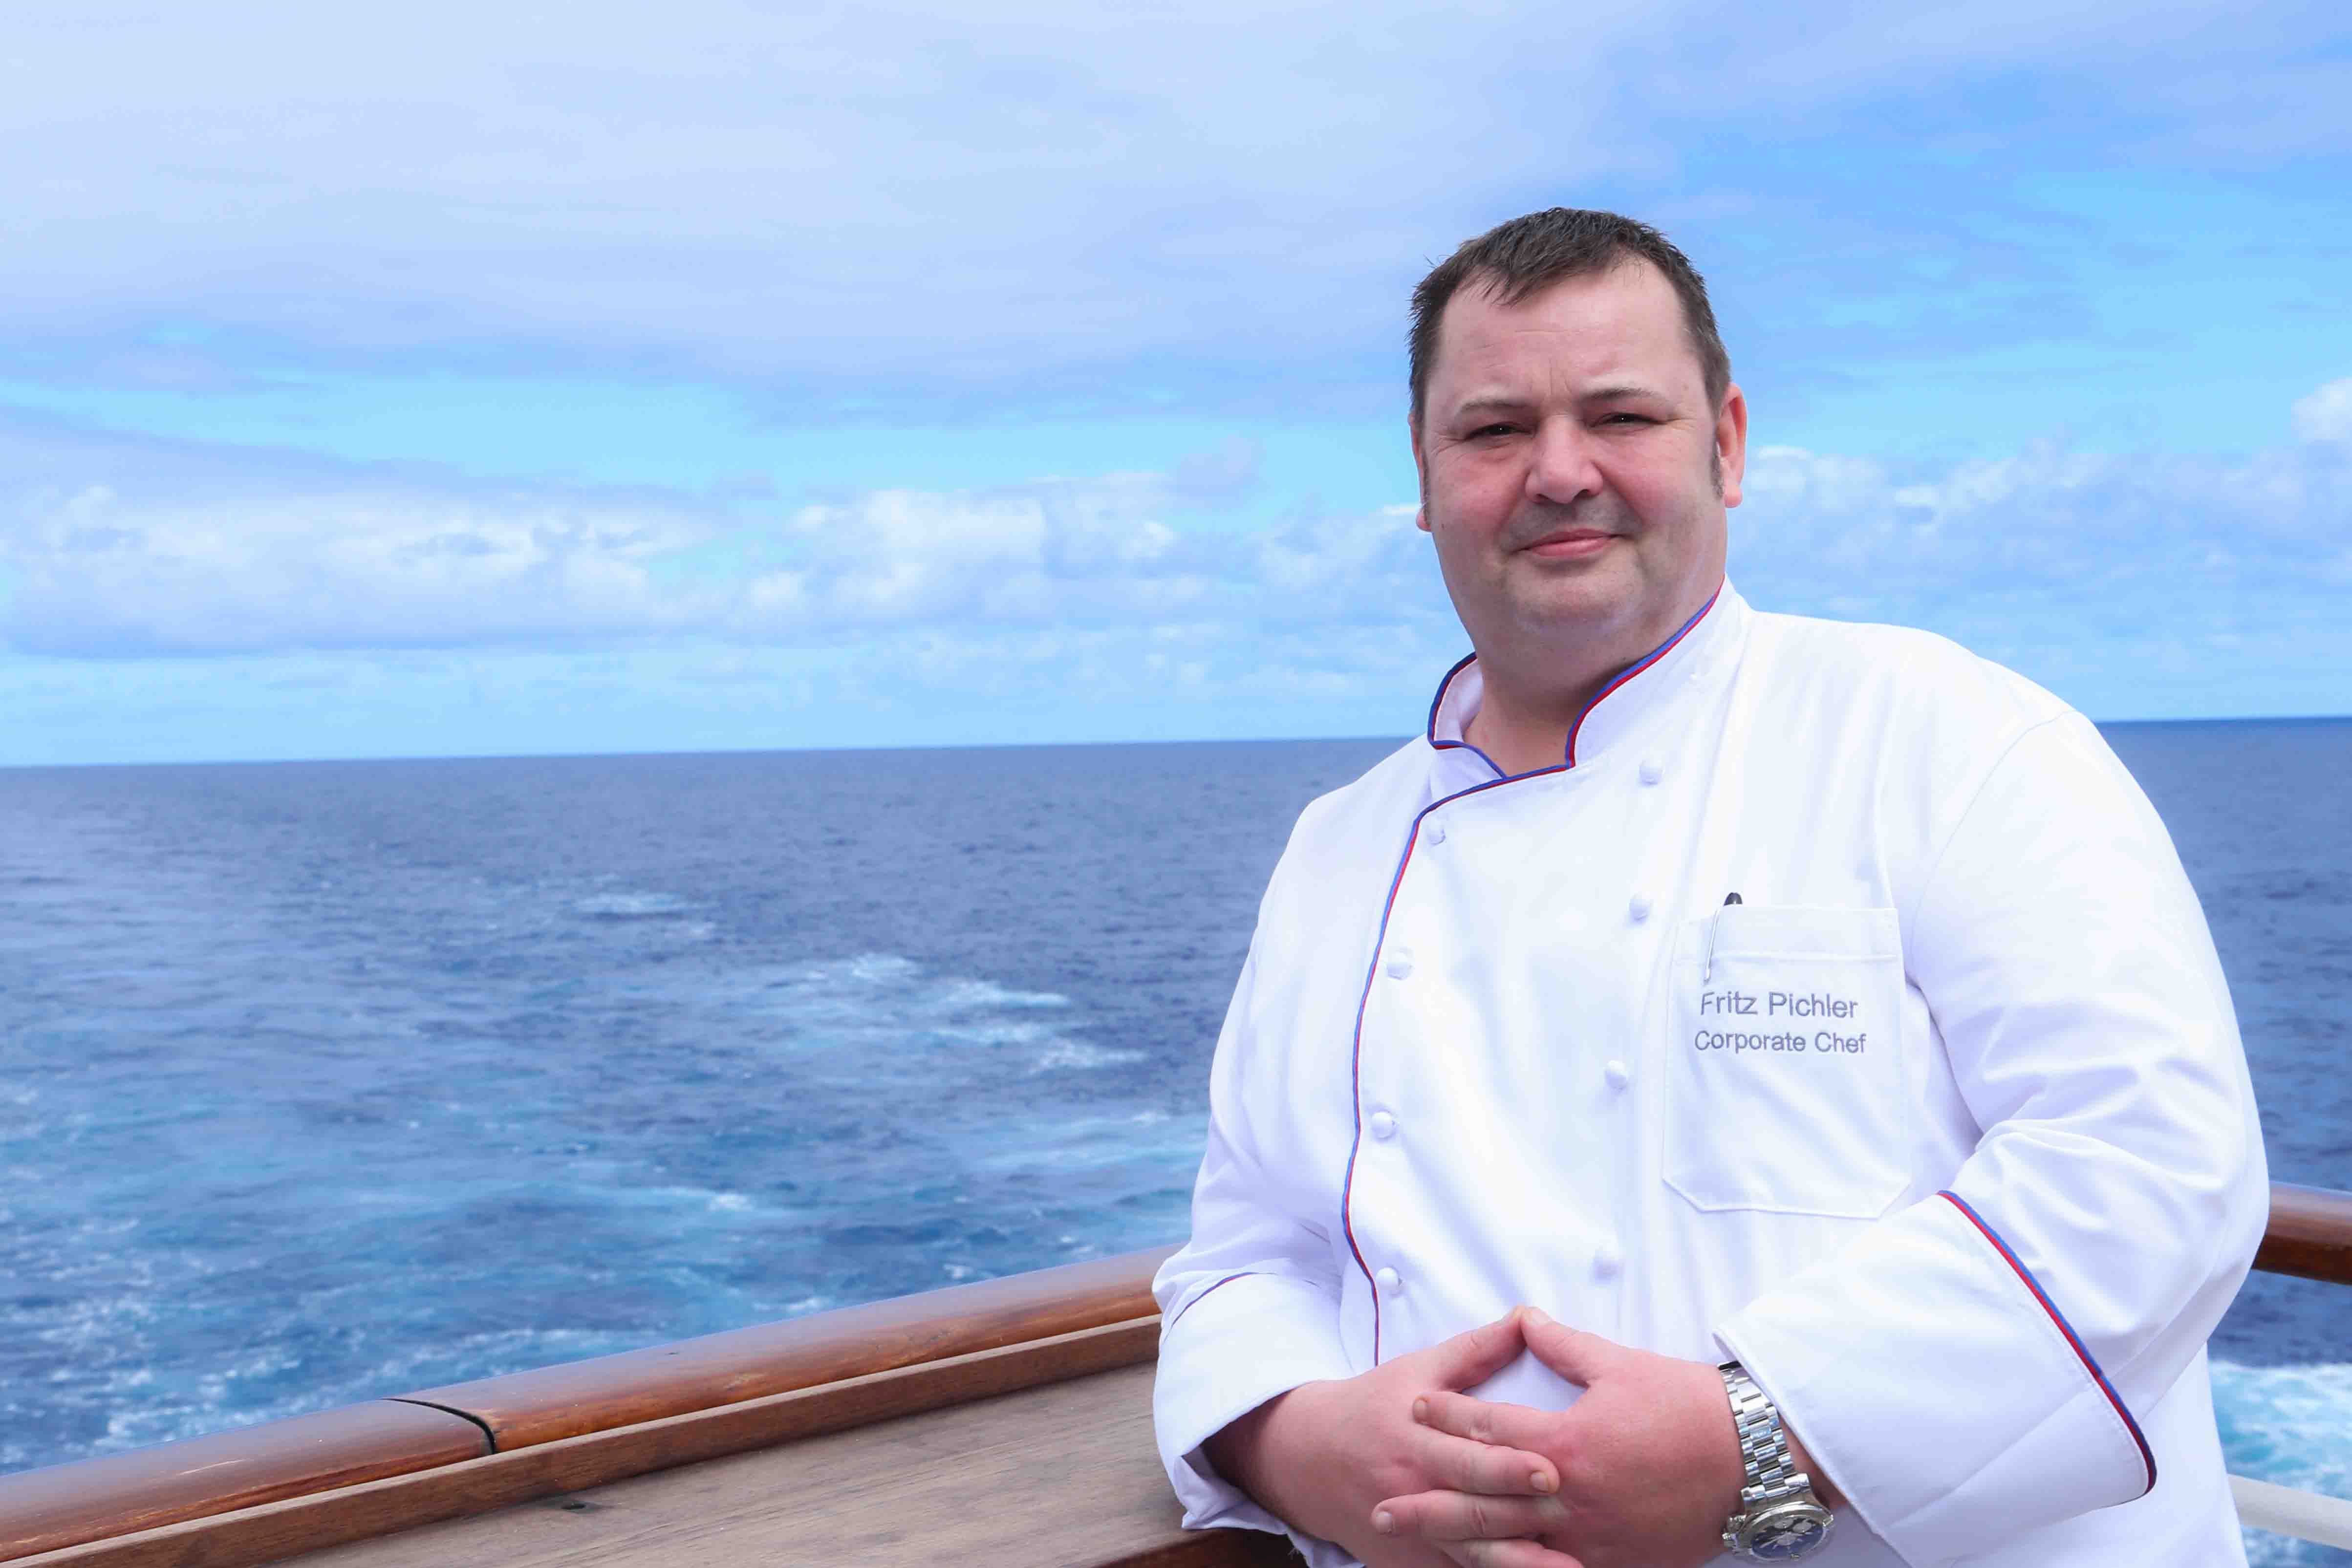 Fritz Pichler cullinary director bei sea chefs steht an der Reling